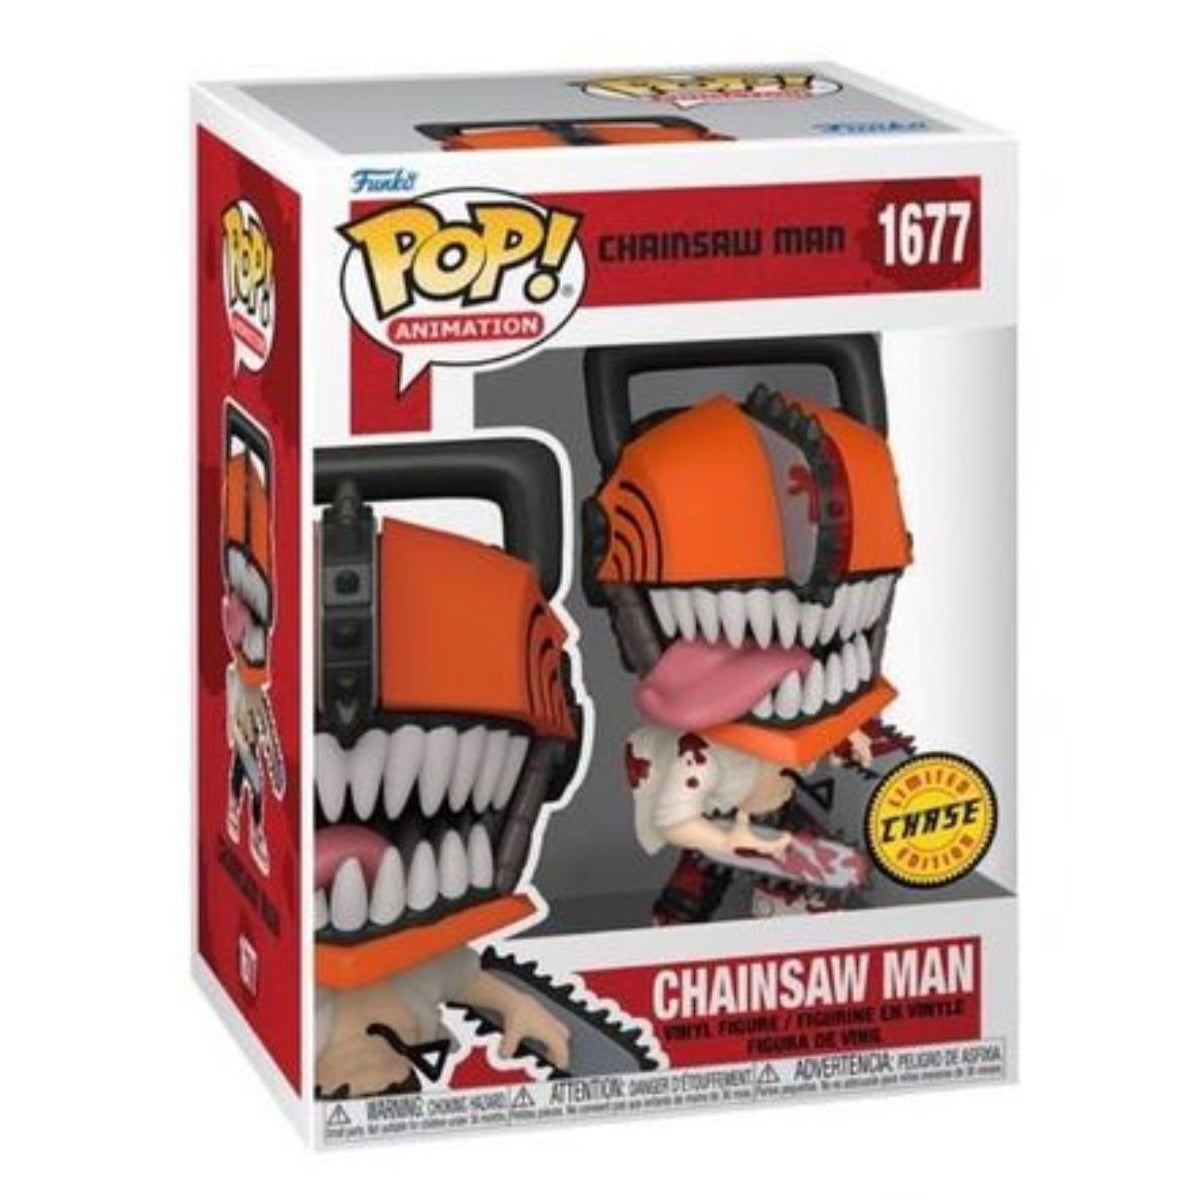 ""PRE-ORDER"" Funko POP! Chainsaw Man: Chainsaw Man CHASE